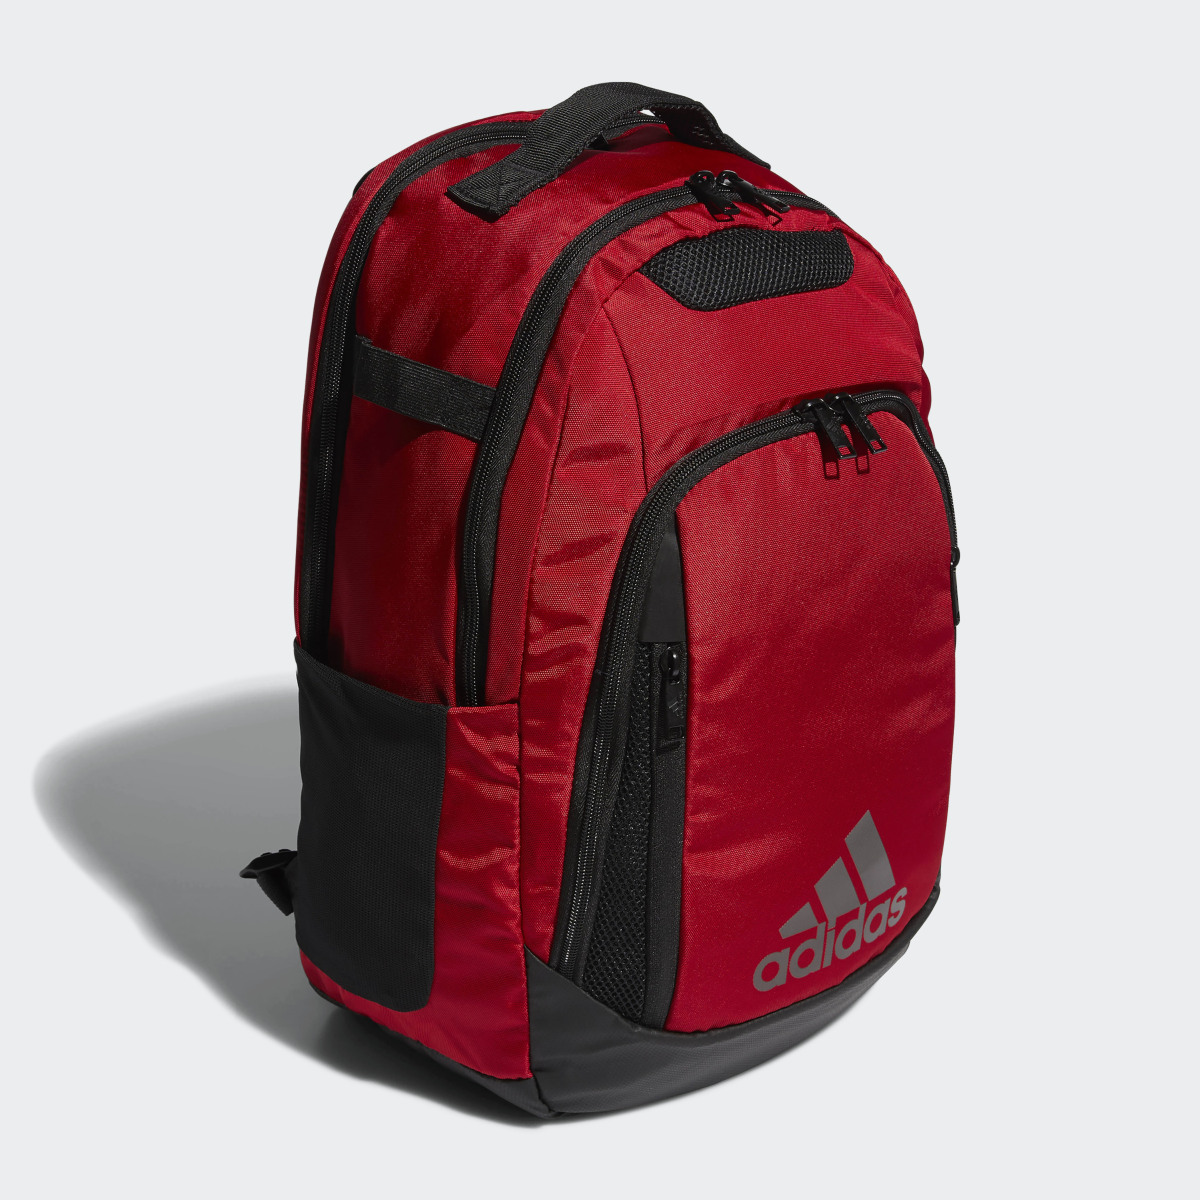 Adidas 5-Star Team Backpack. 4